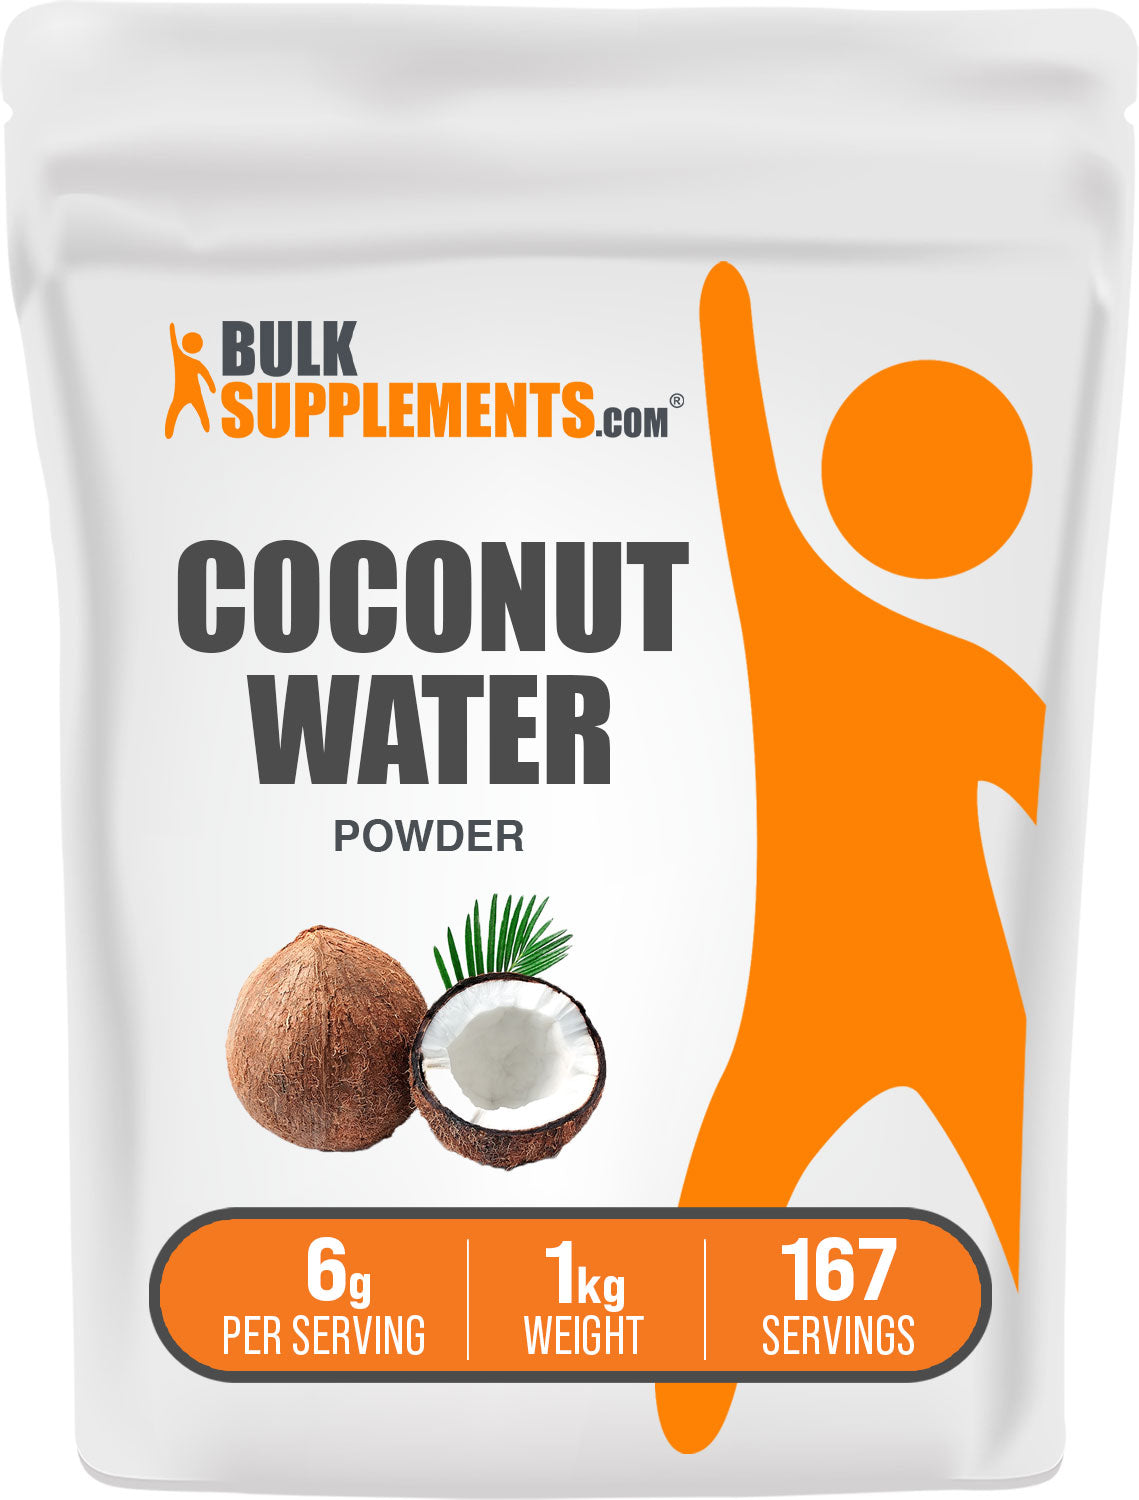 1kg bag of Coconut Powder